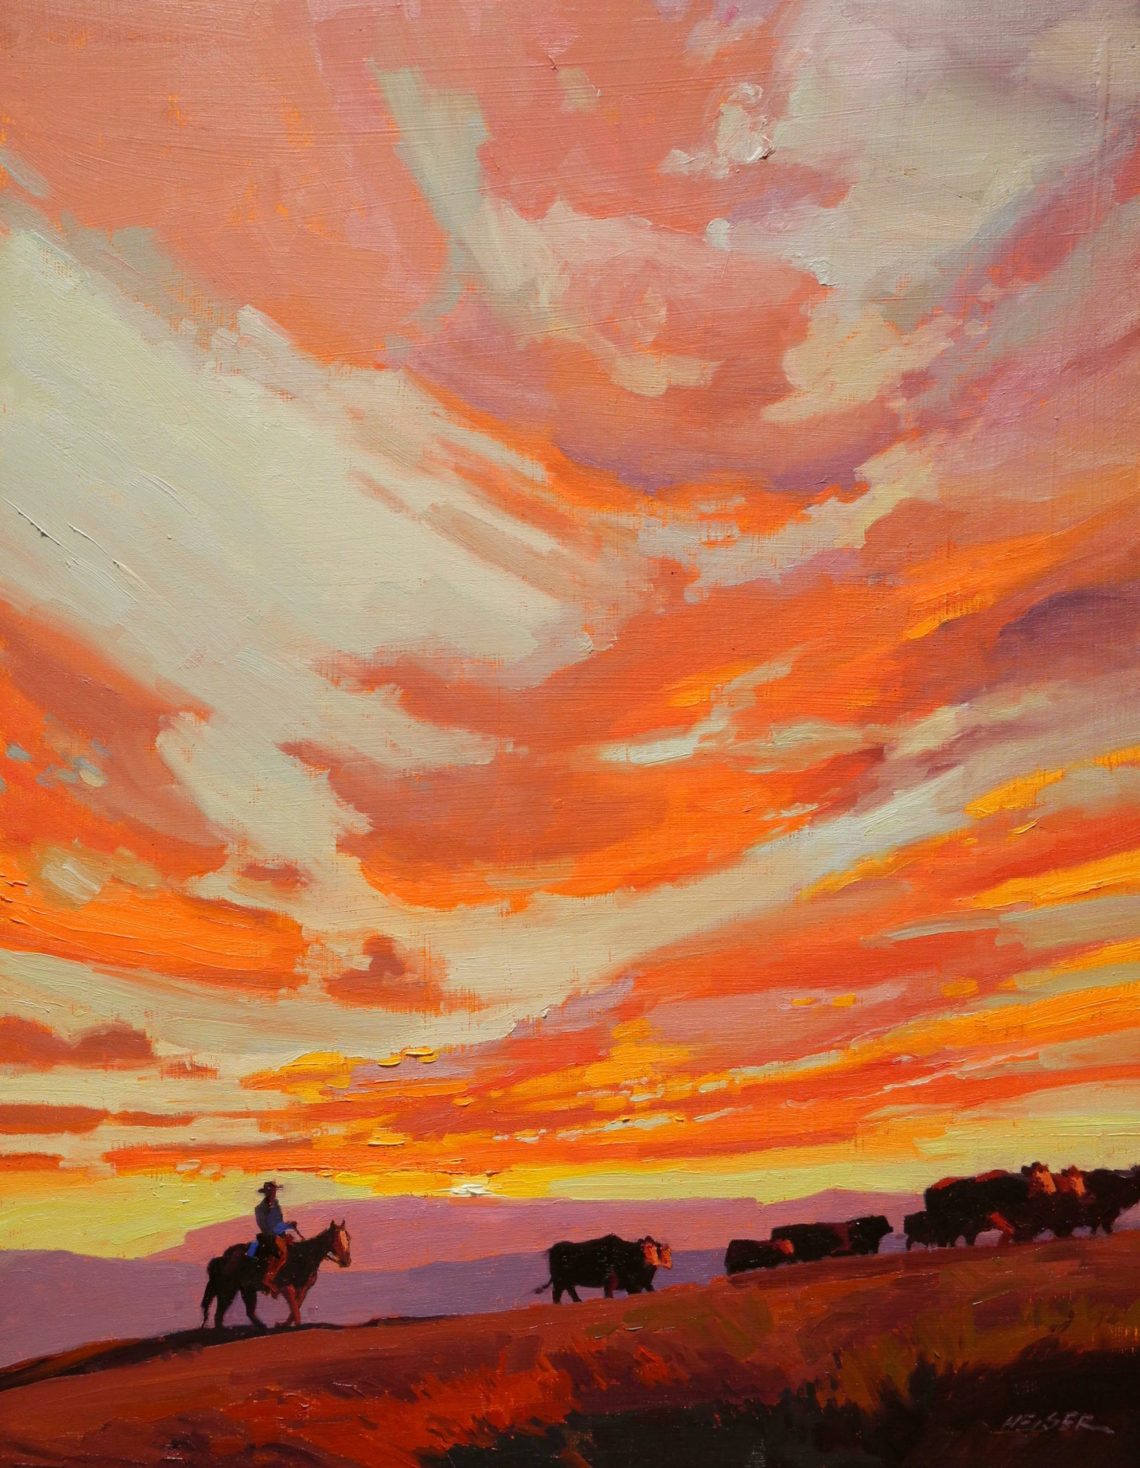 Light of Sunset, 24 x 18 - Sold